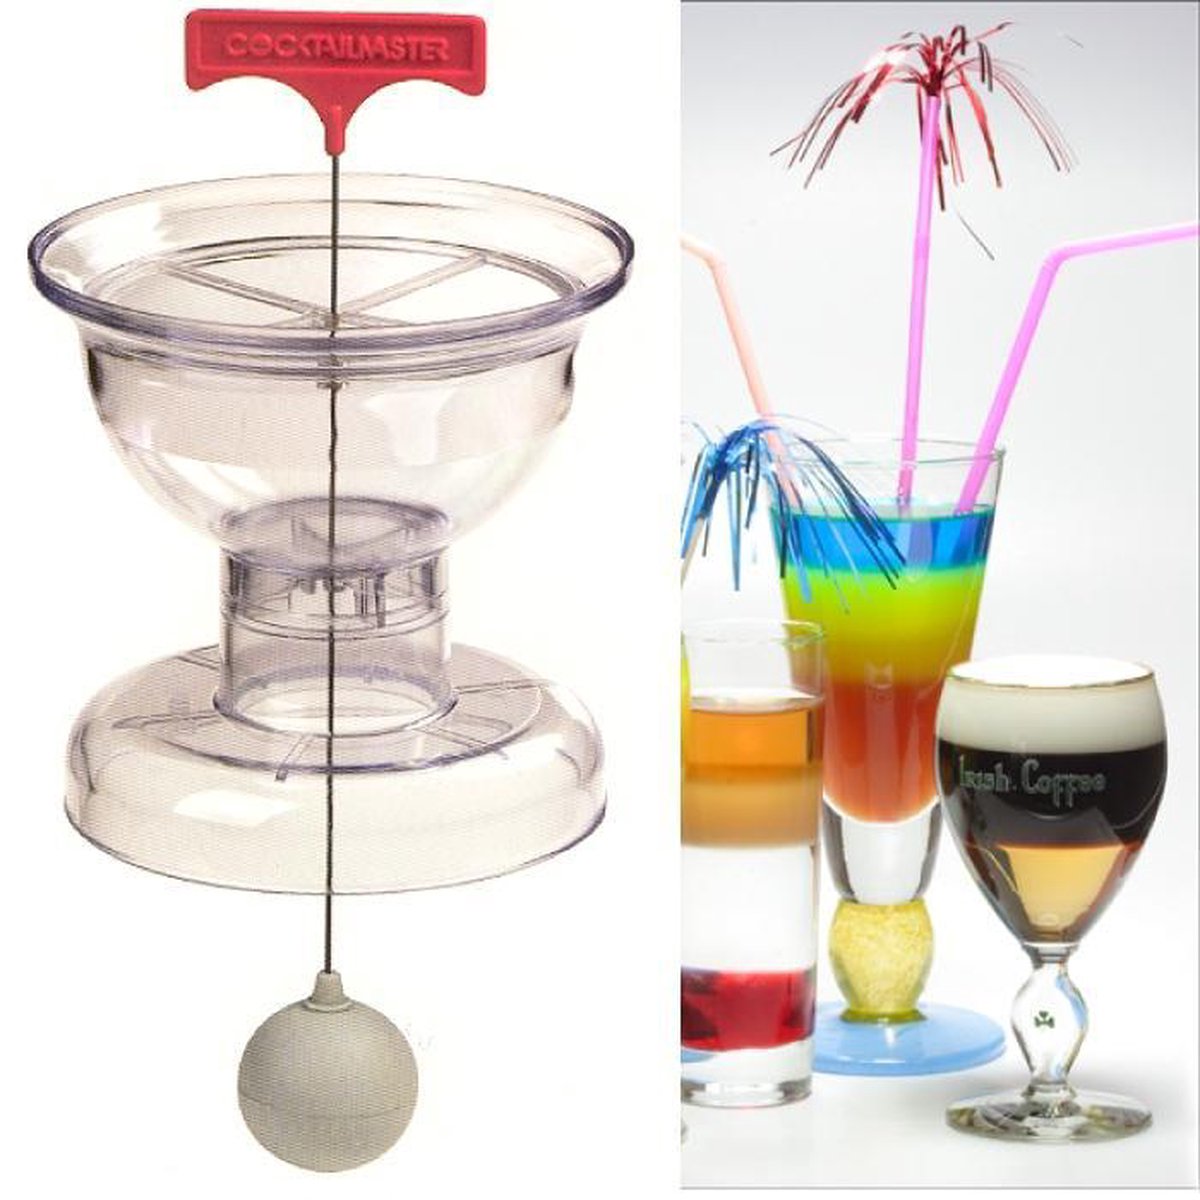 Cocktailmaster - Transparent